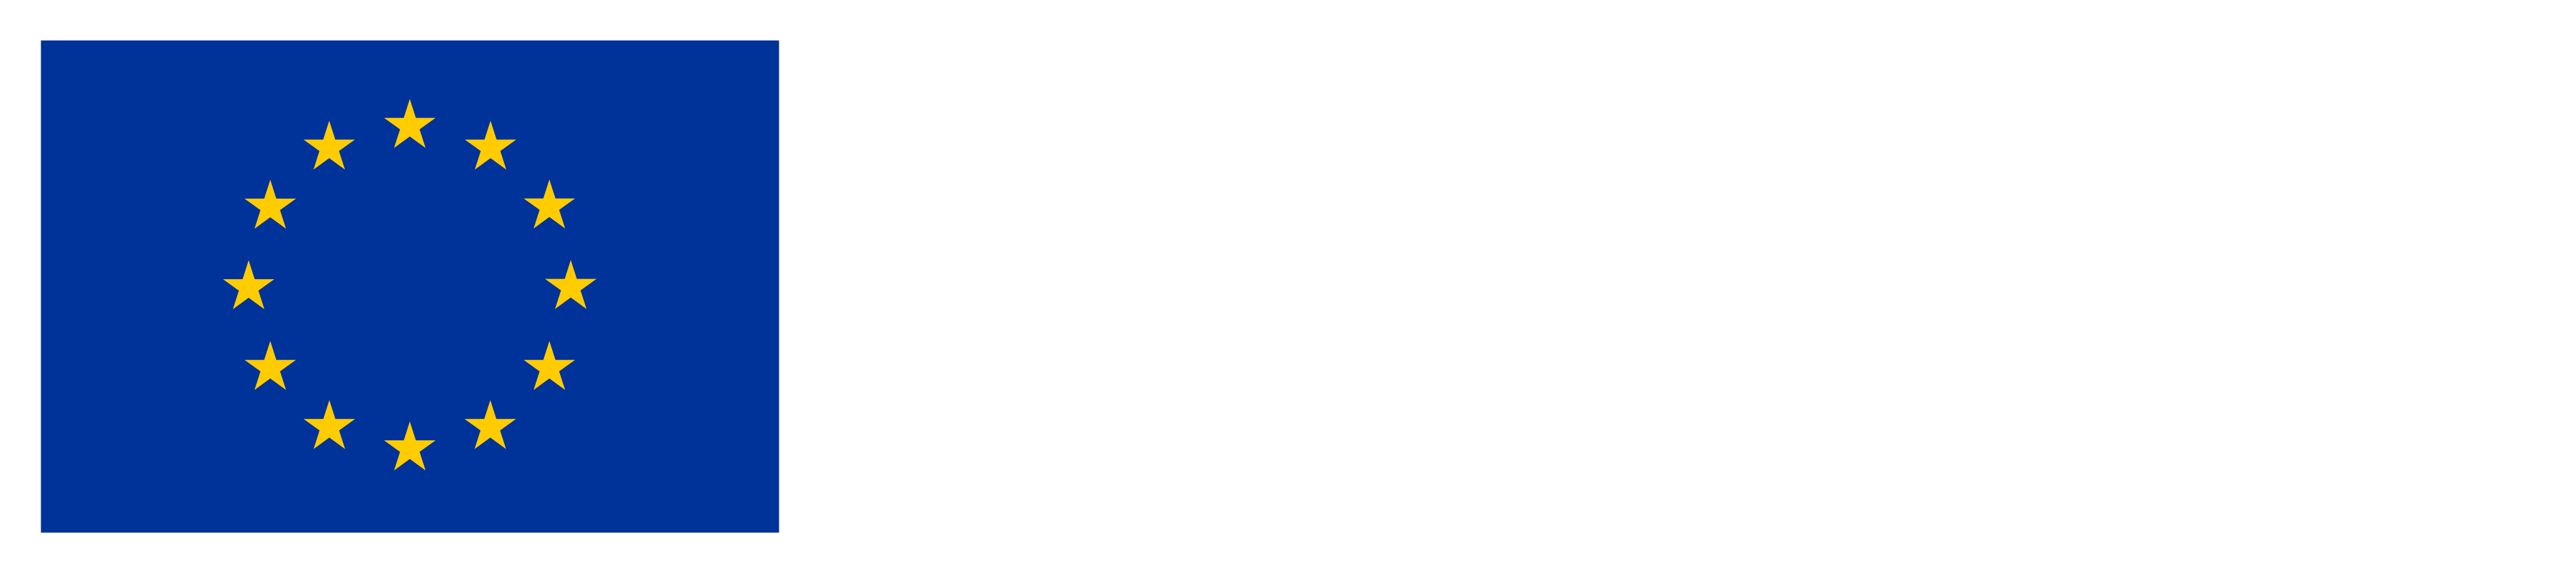 EU emblem and funding statement